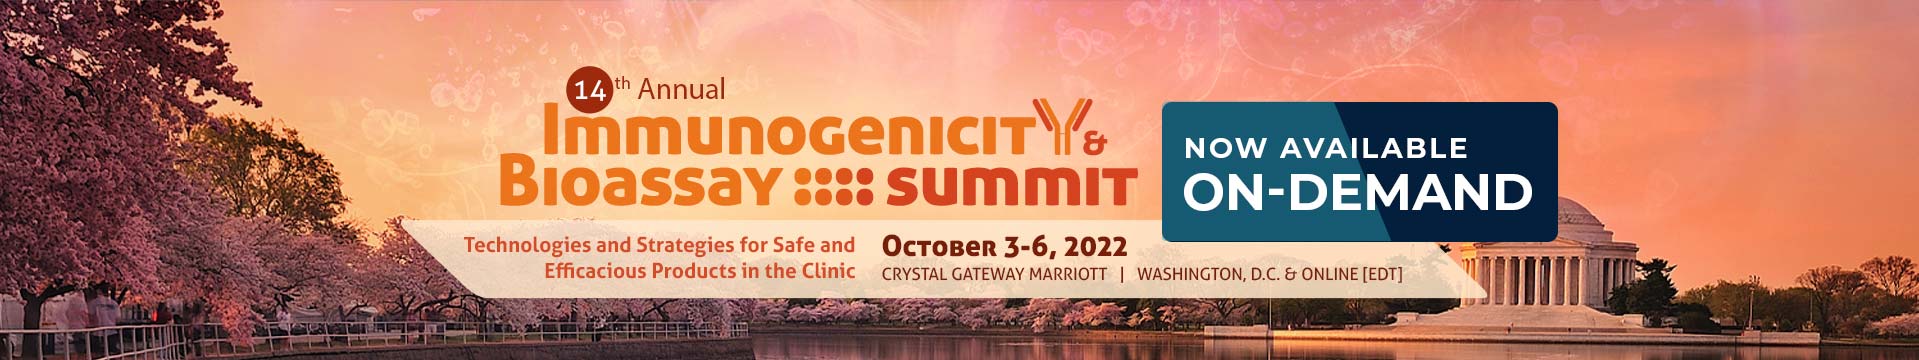 Immunogenicity Bioassay Summit - September 27-30, 2022